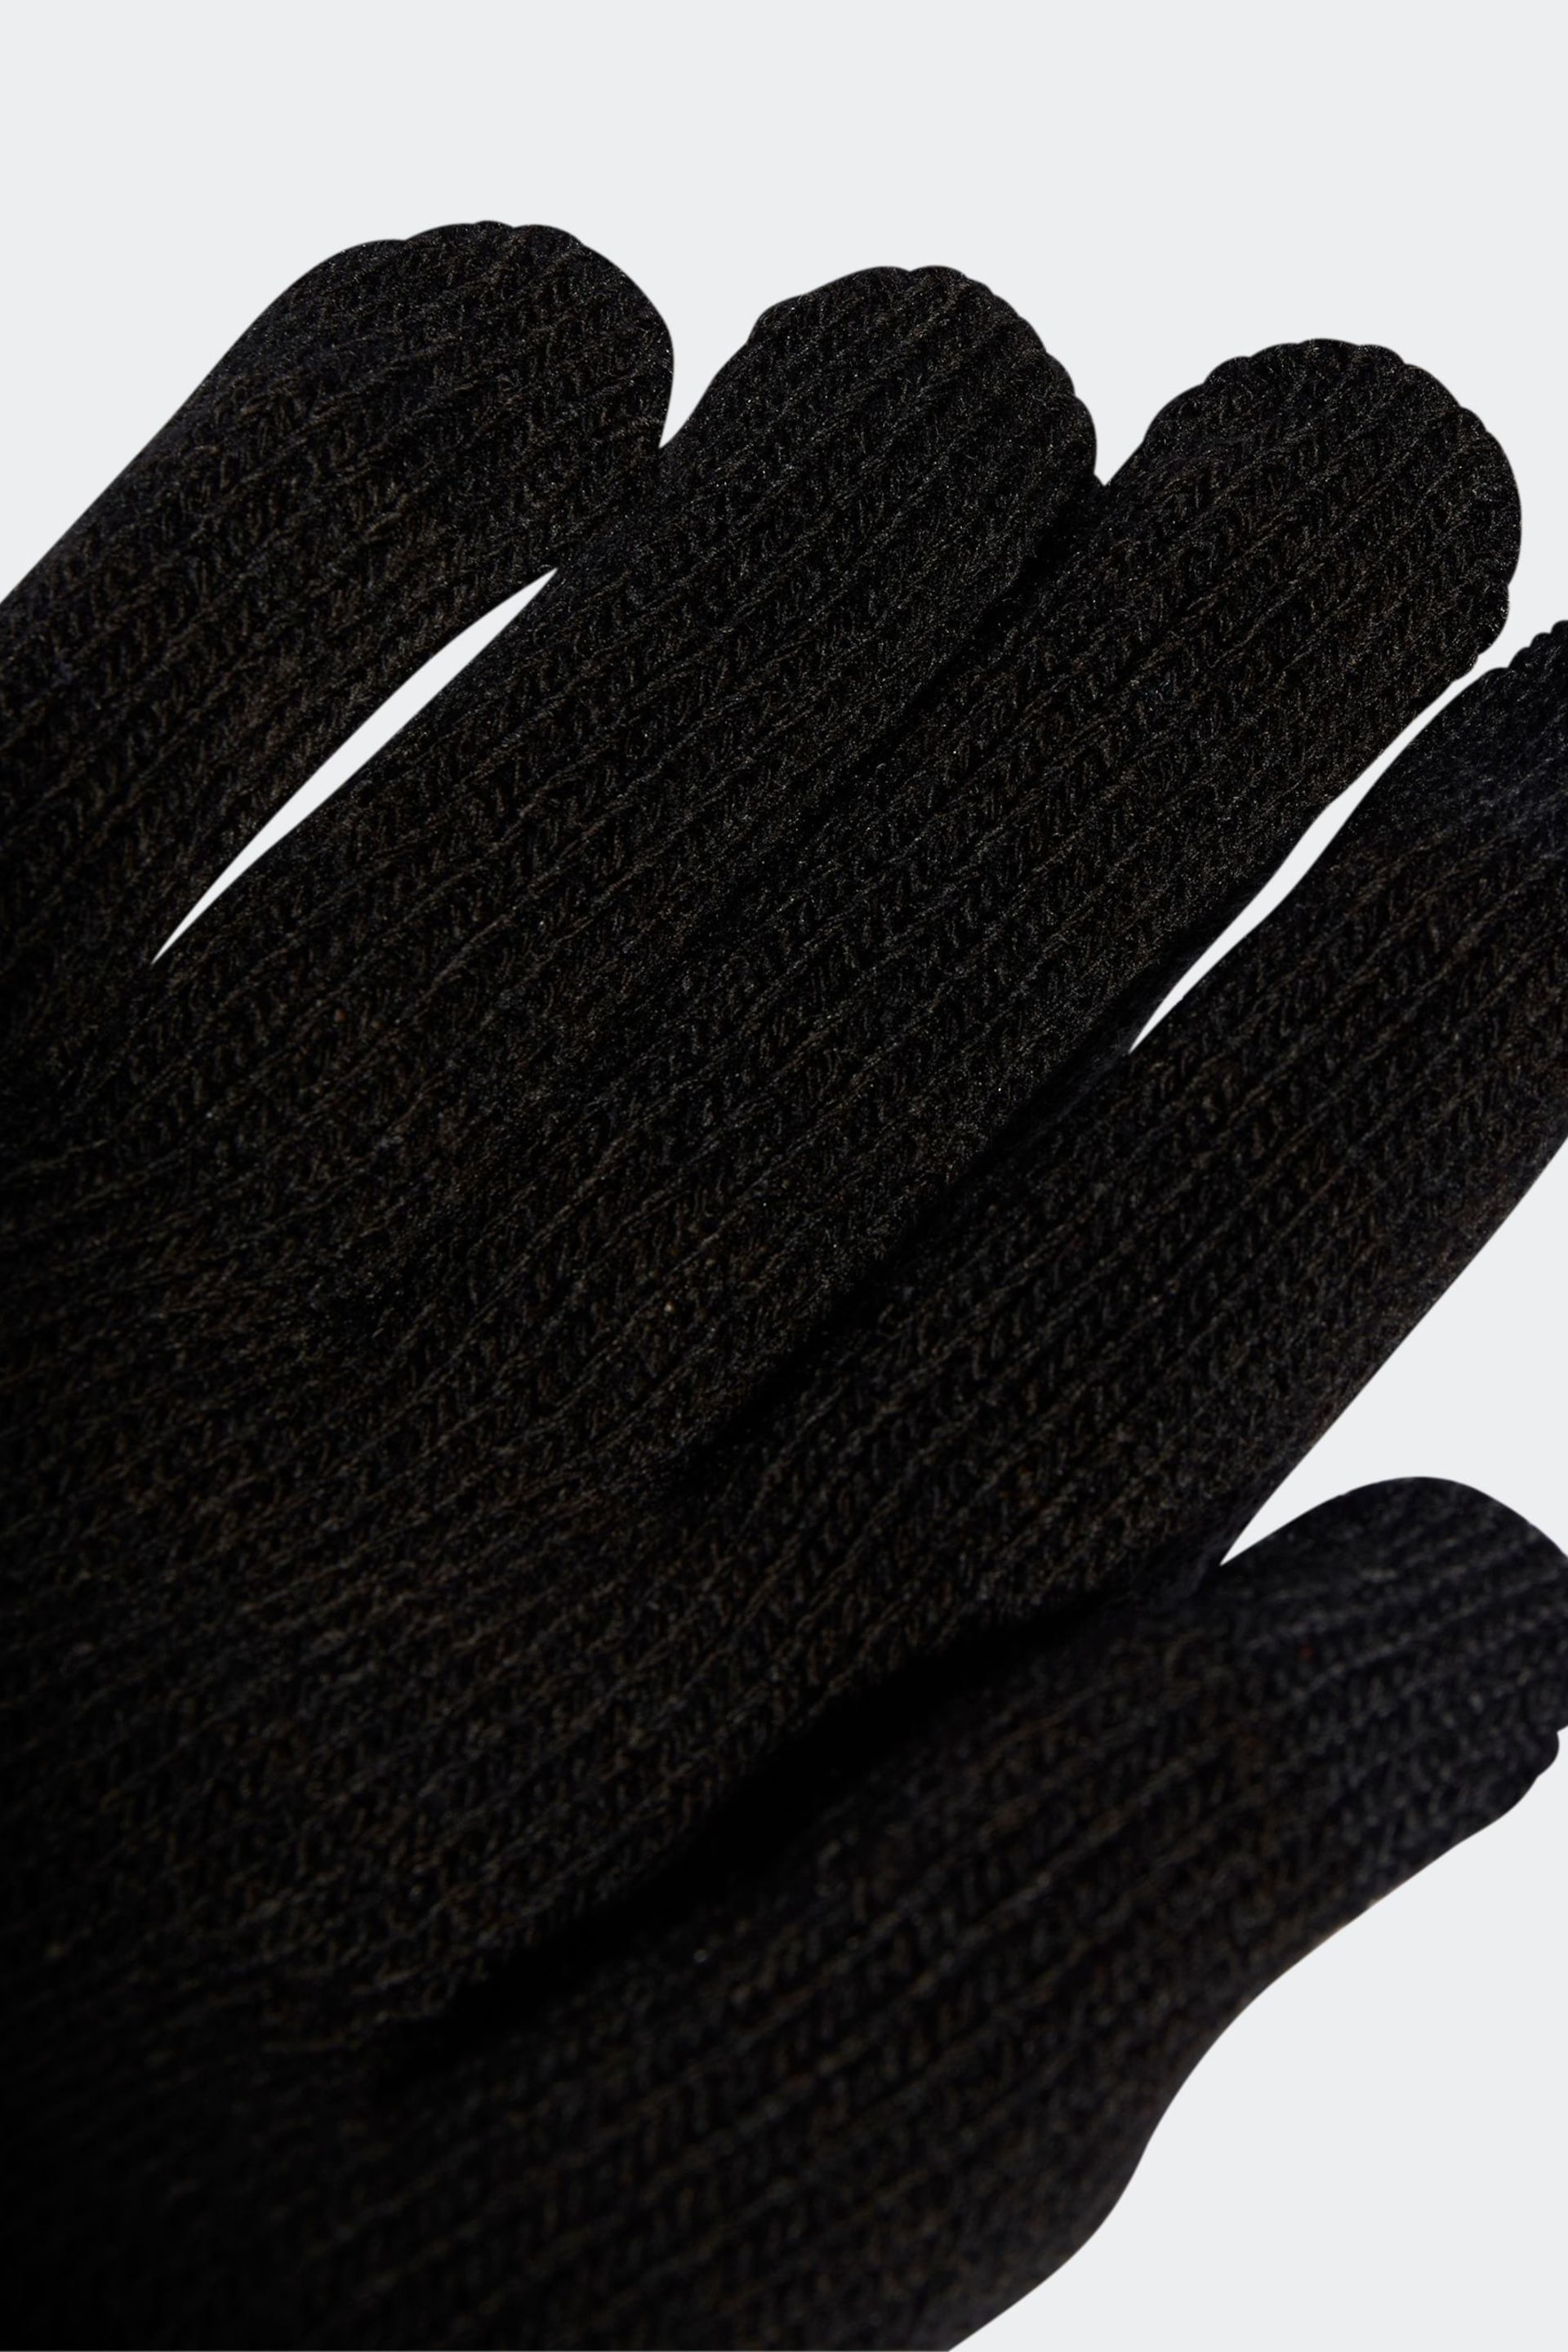 adidas Black Essentials Gloves - Image 3 of 4